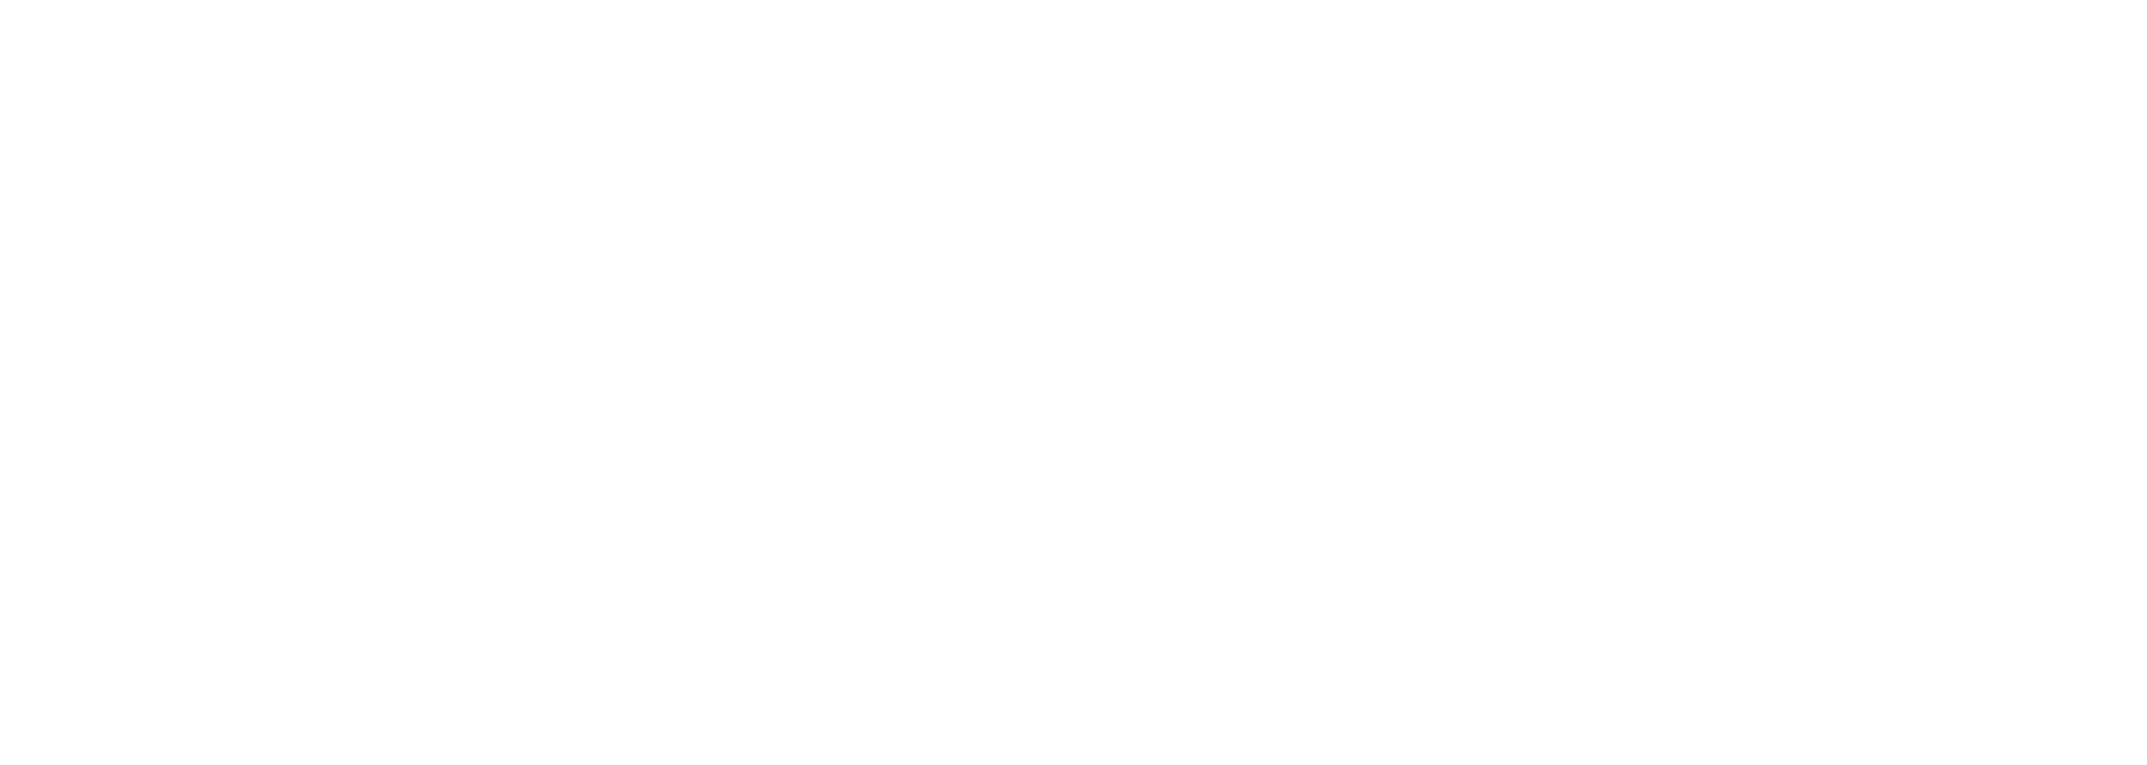 Neighborhoods_PageTitle